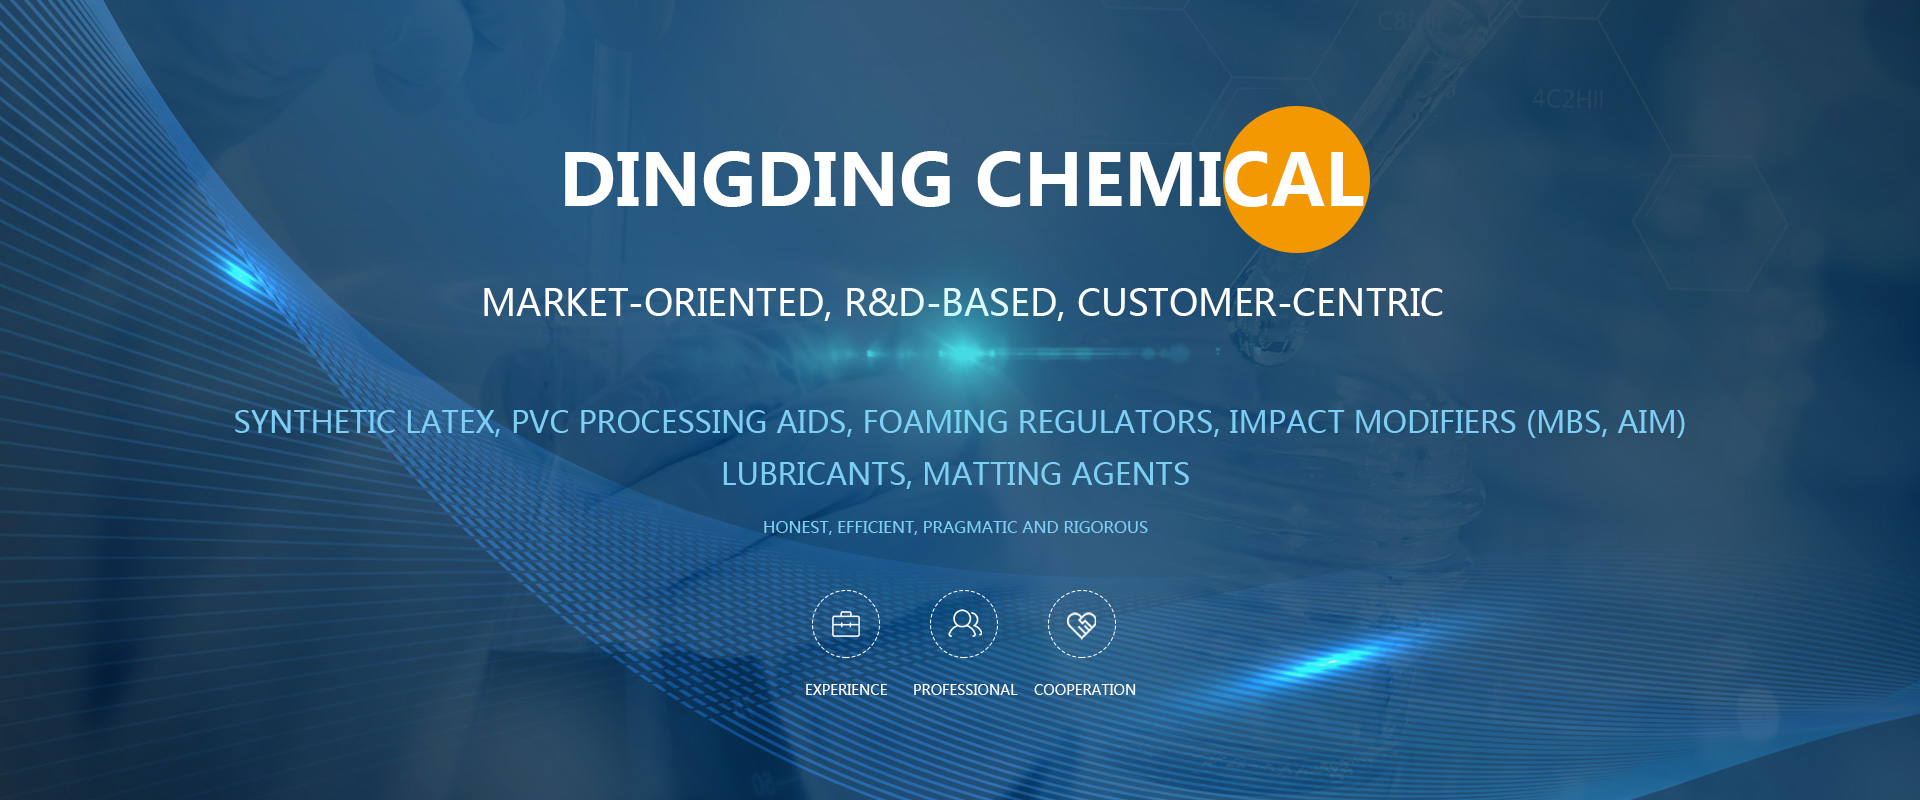 Shandong Dingding Chemical Co., Ltd.